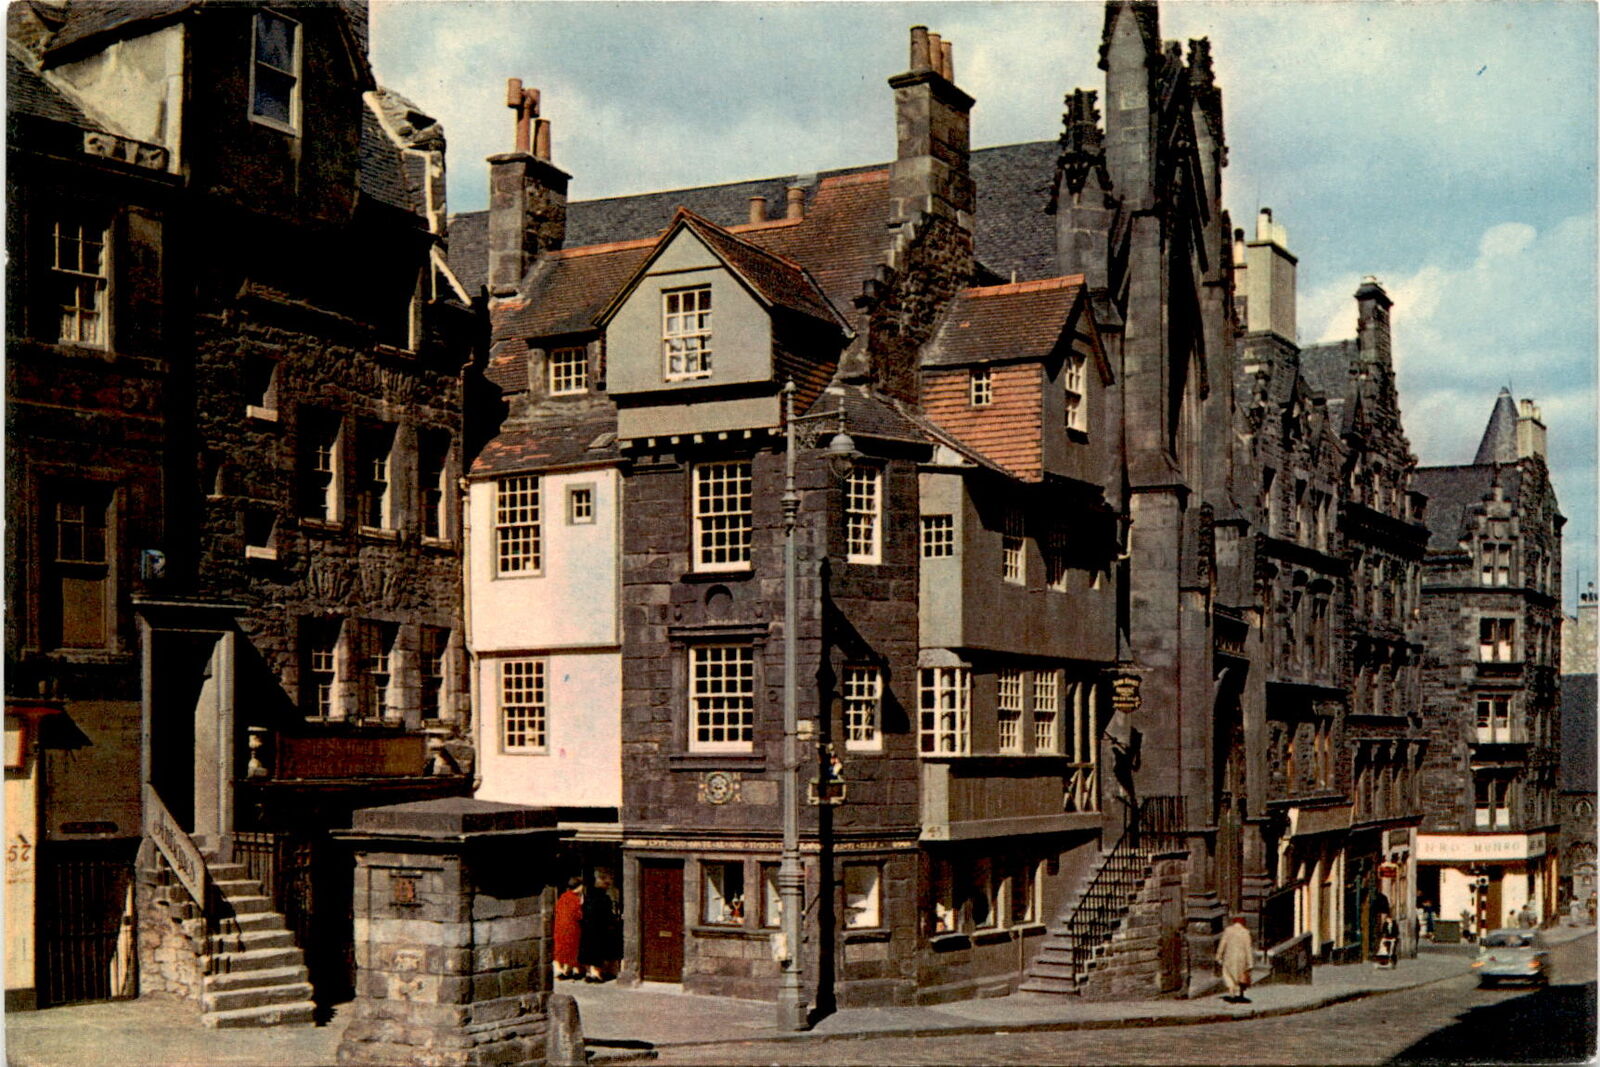 John Knox's House, Edinburgh, Scotland, High Street, 16th century, Postcard